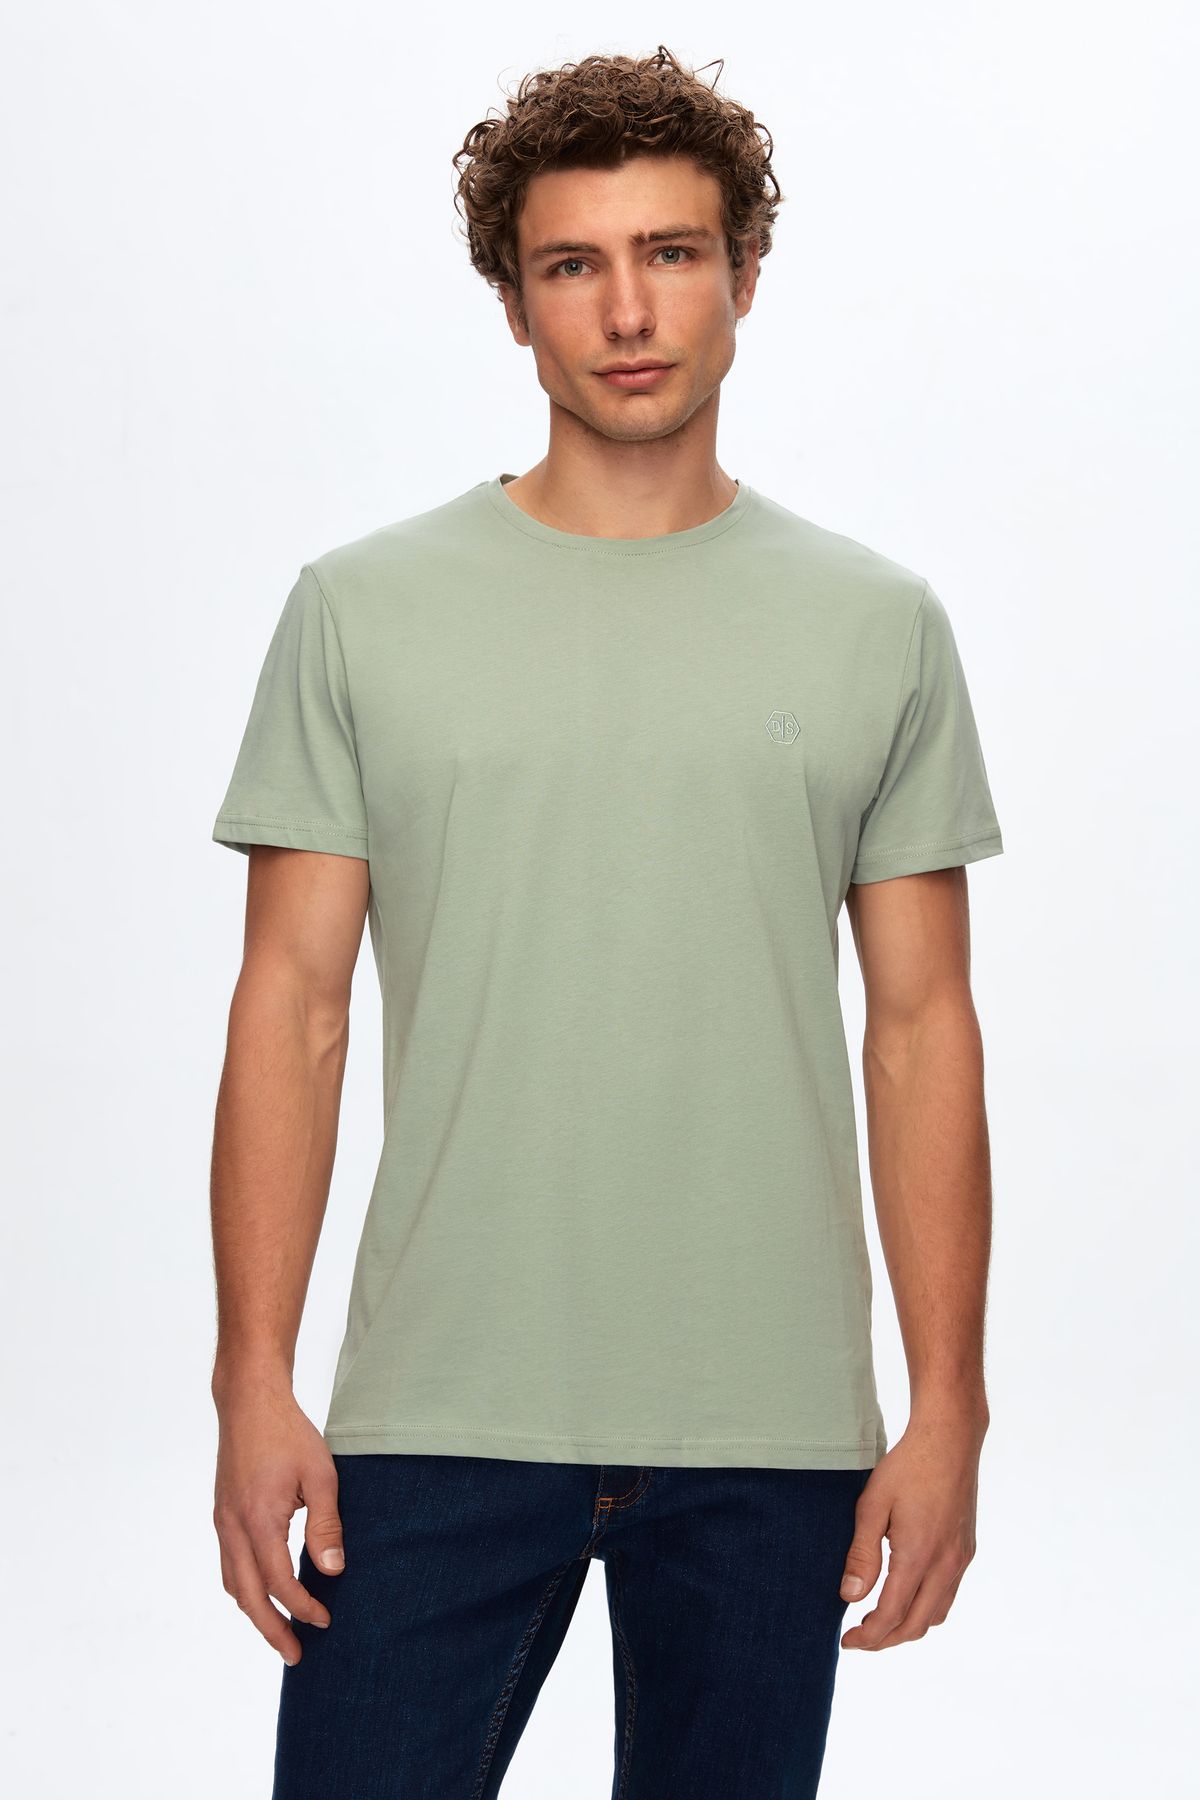 D'S Damat Ds Damat Regular Fit Çağla Düz Örgü Nakışlı %100 Pamuk T-shirt